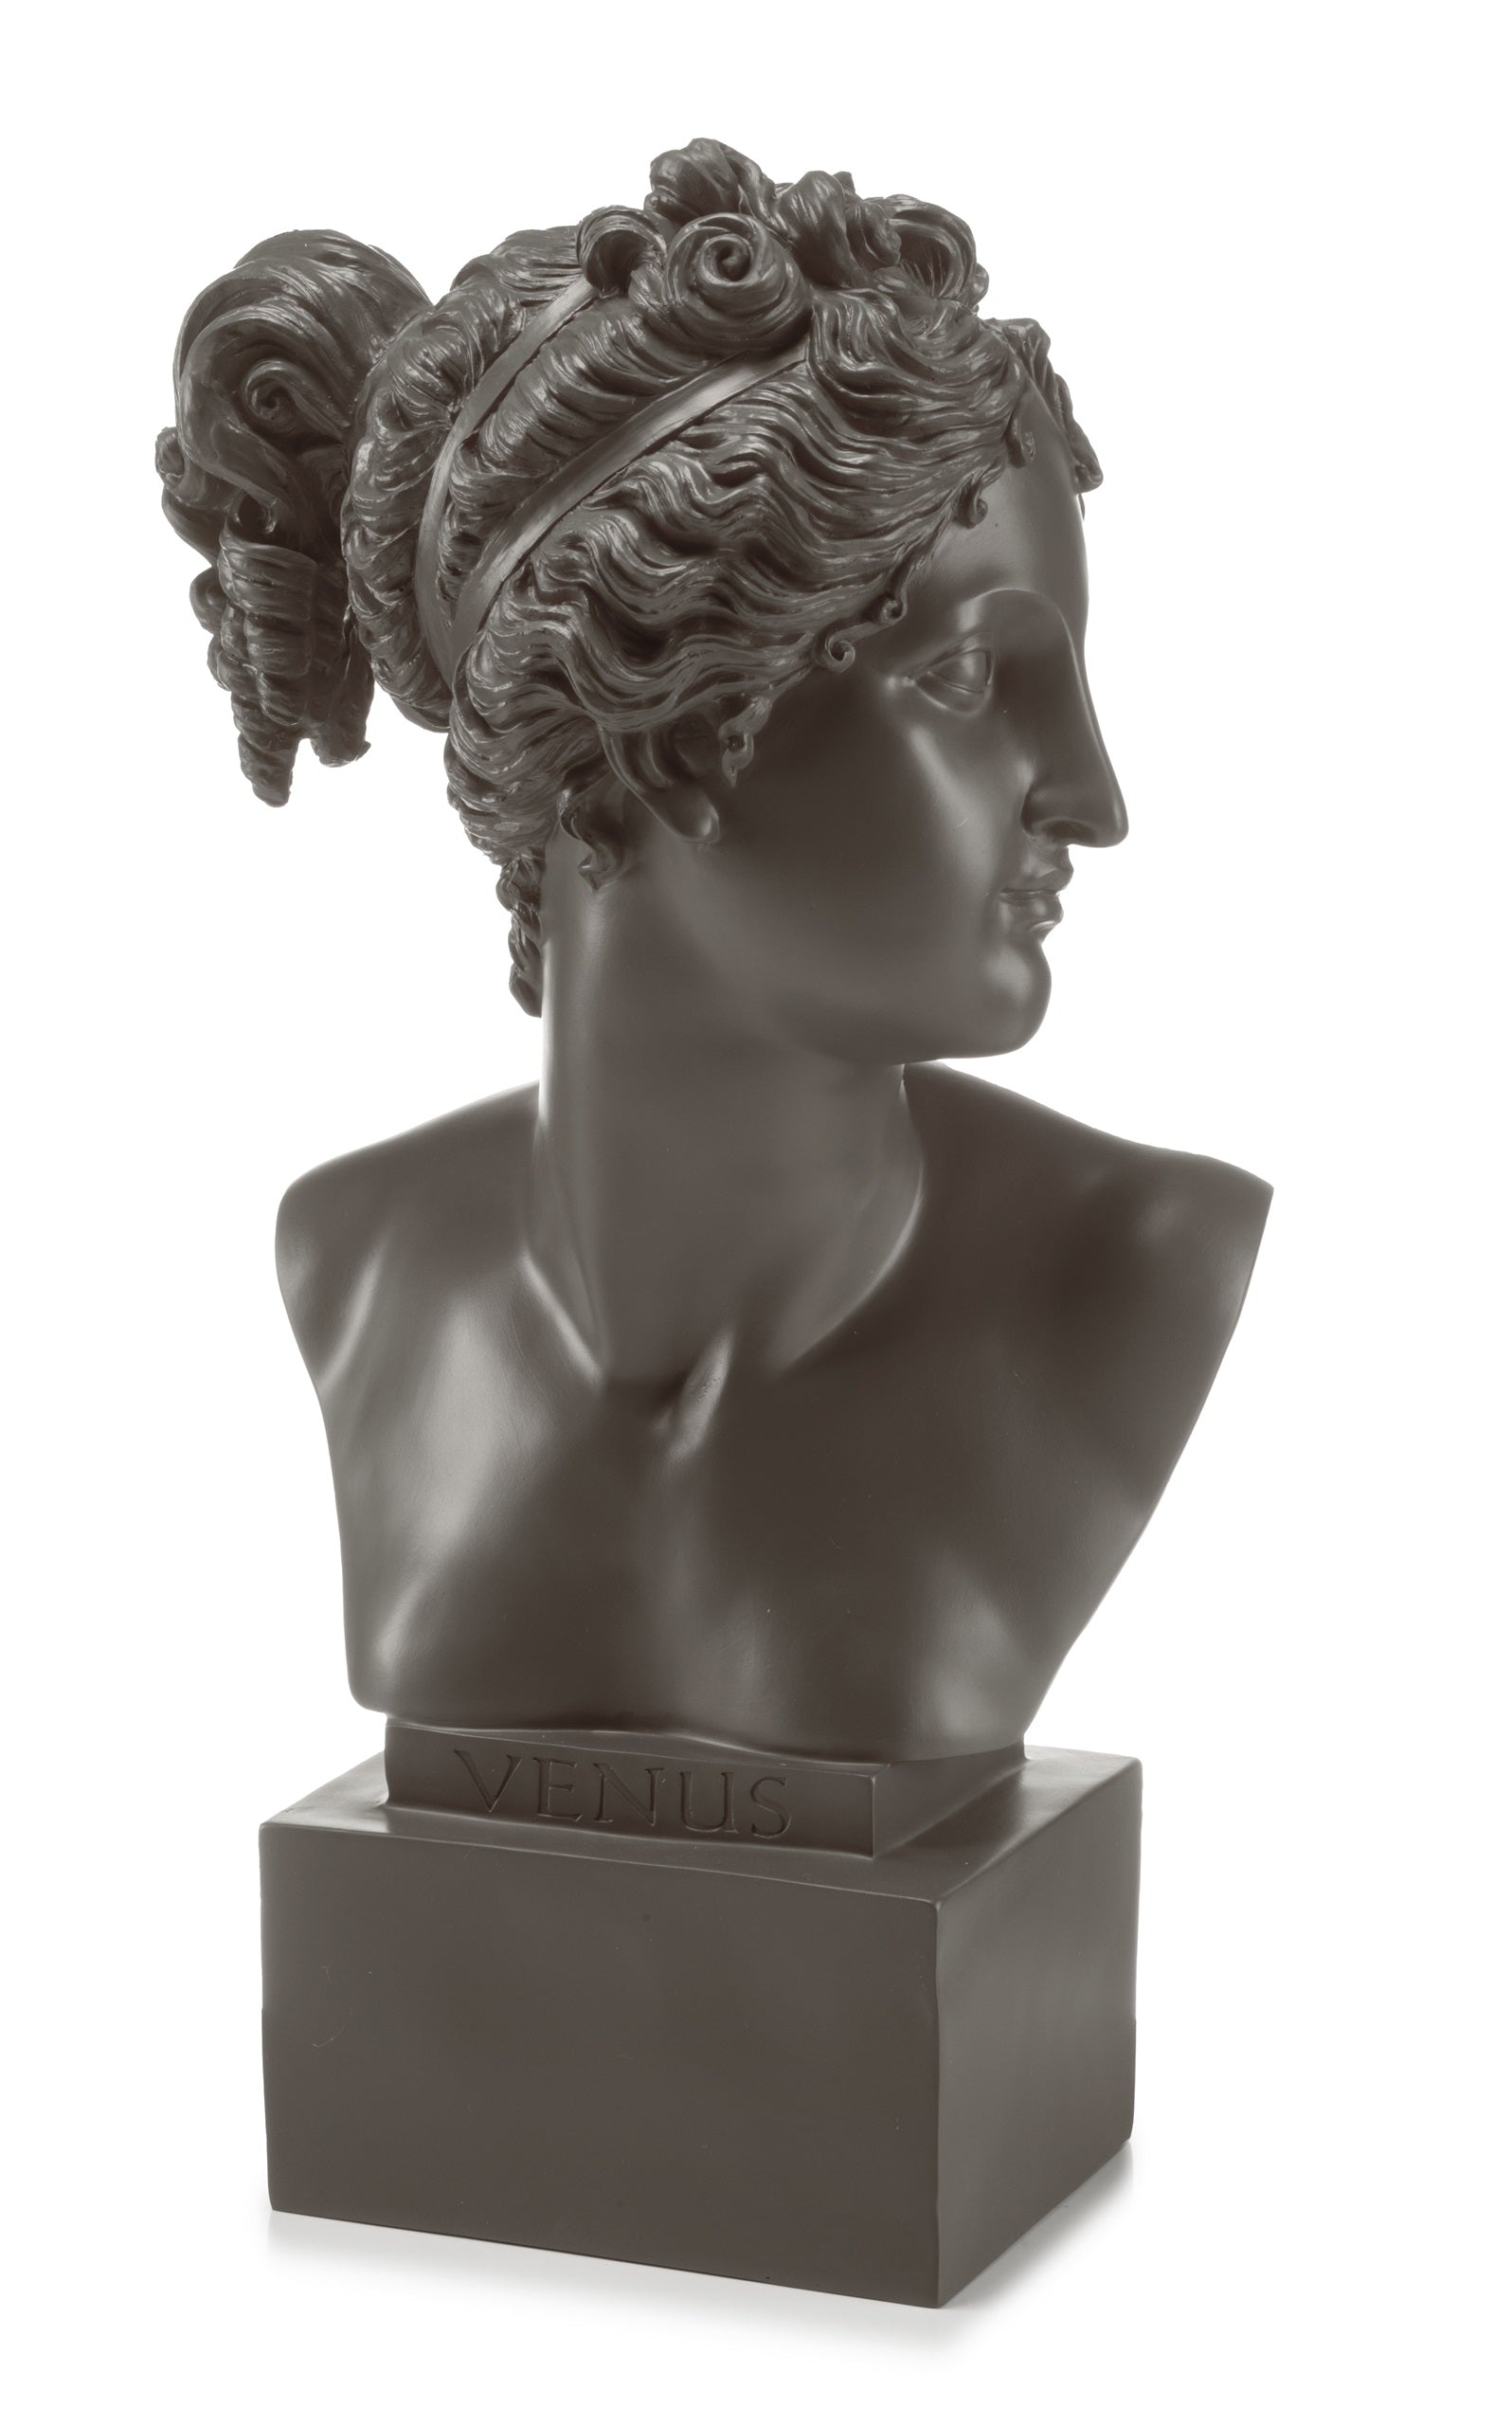 Palais Royal Bellimbusti Busto Venere, 53 cm